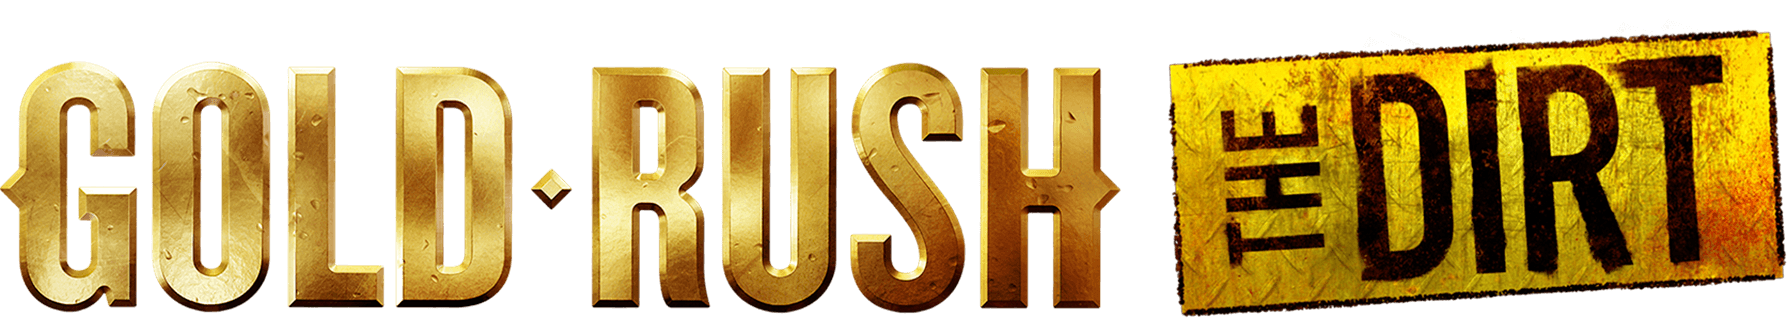 Gold Rush: The Dirt logo